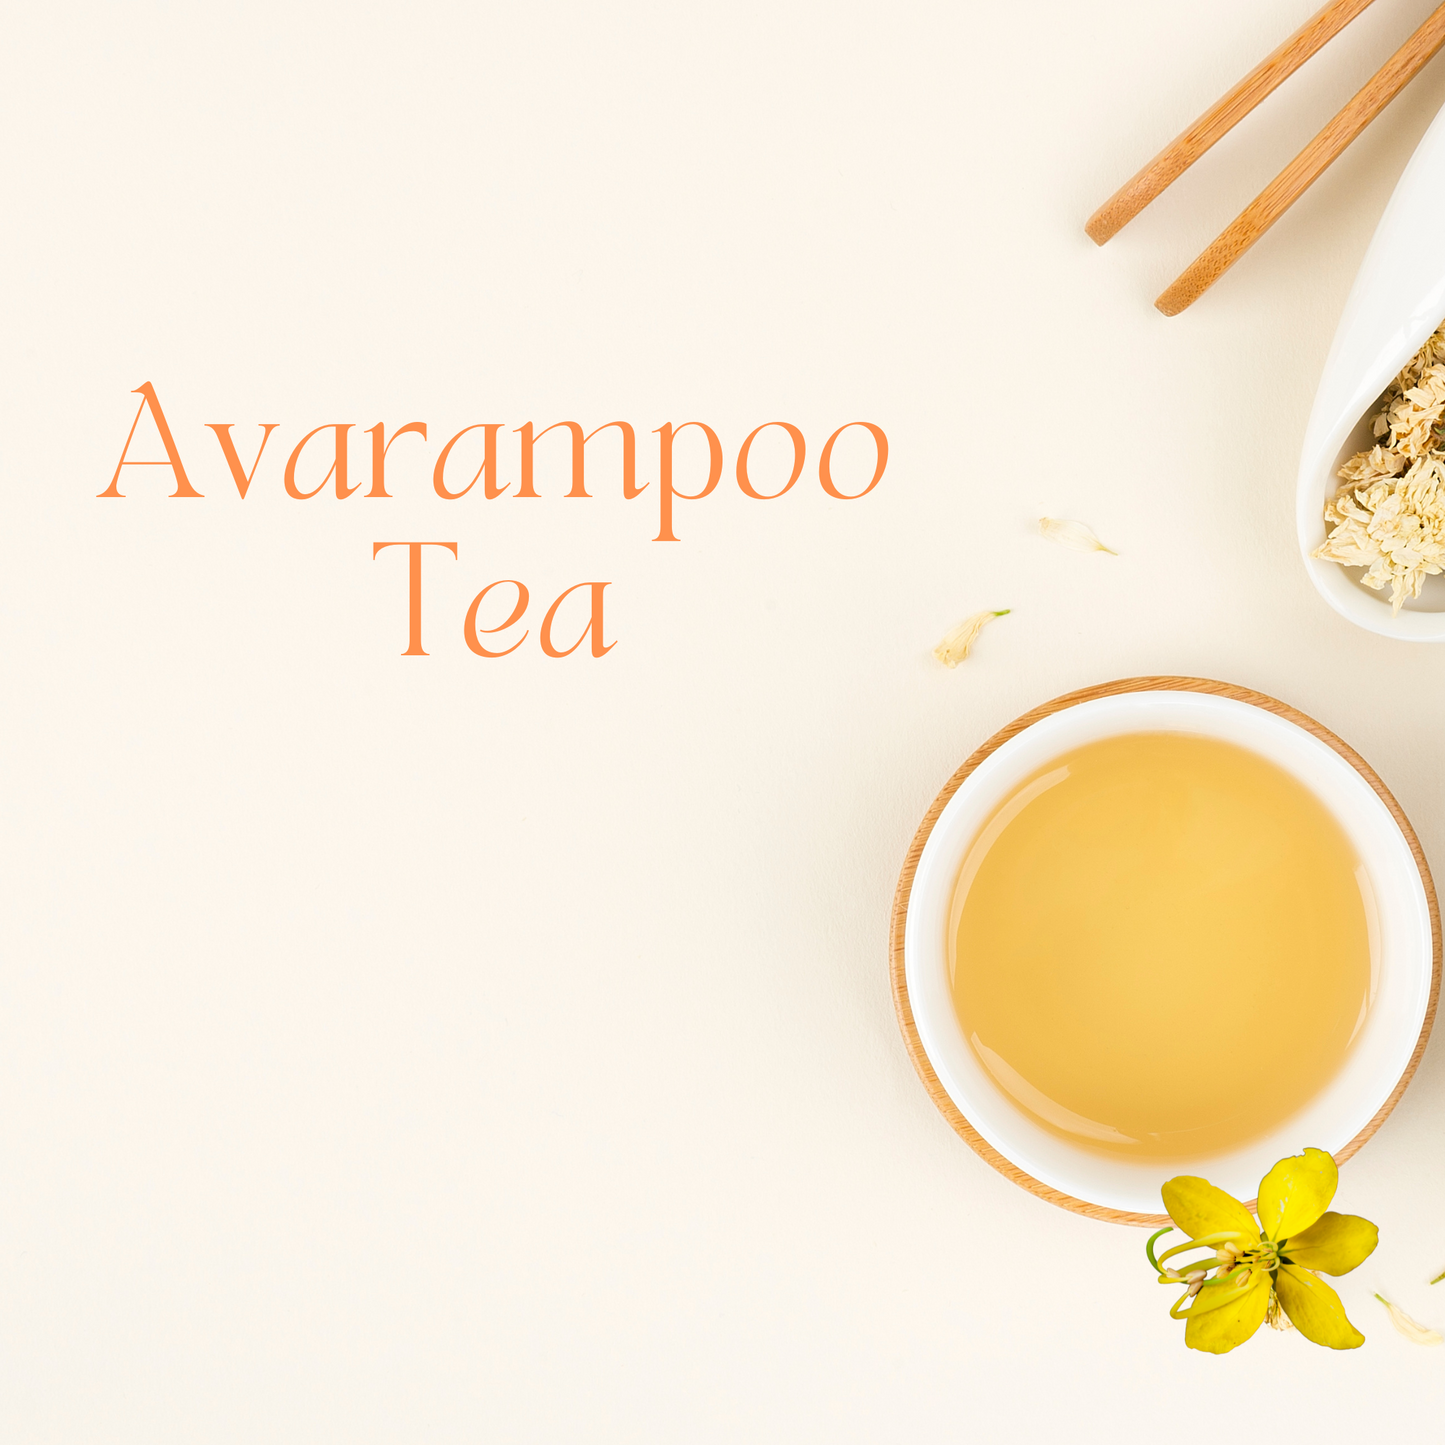 Avarampoo tea for health